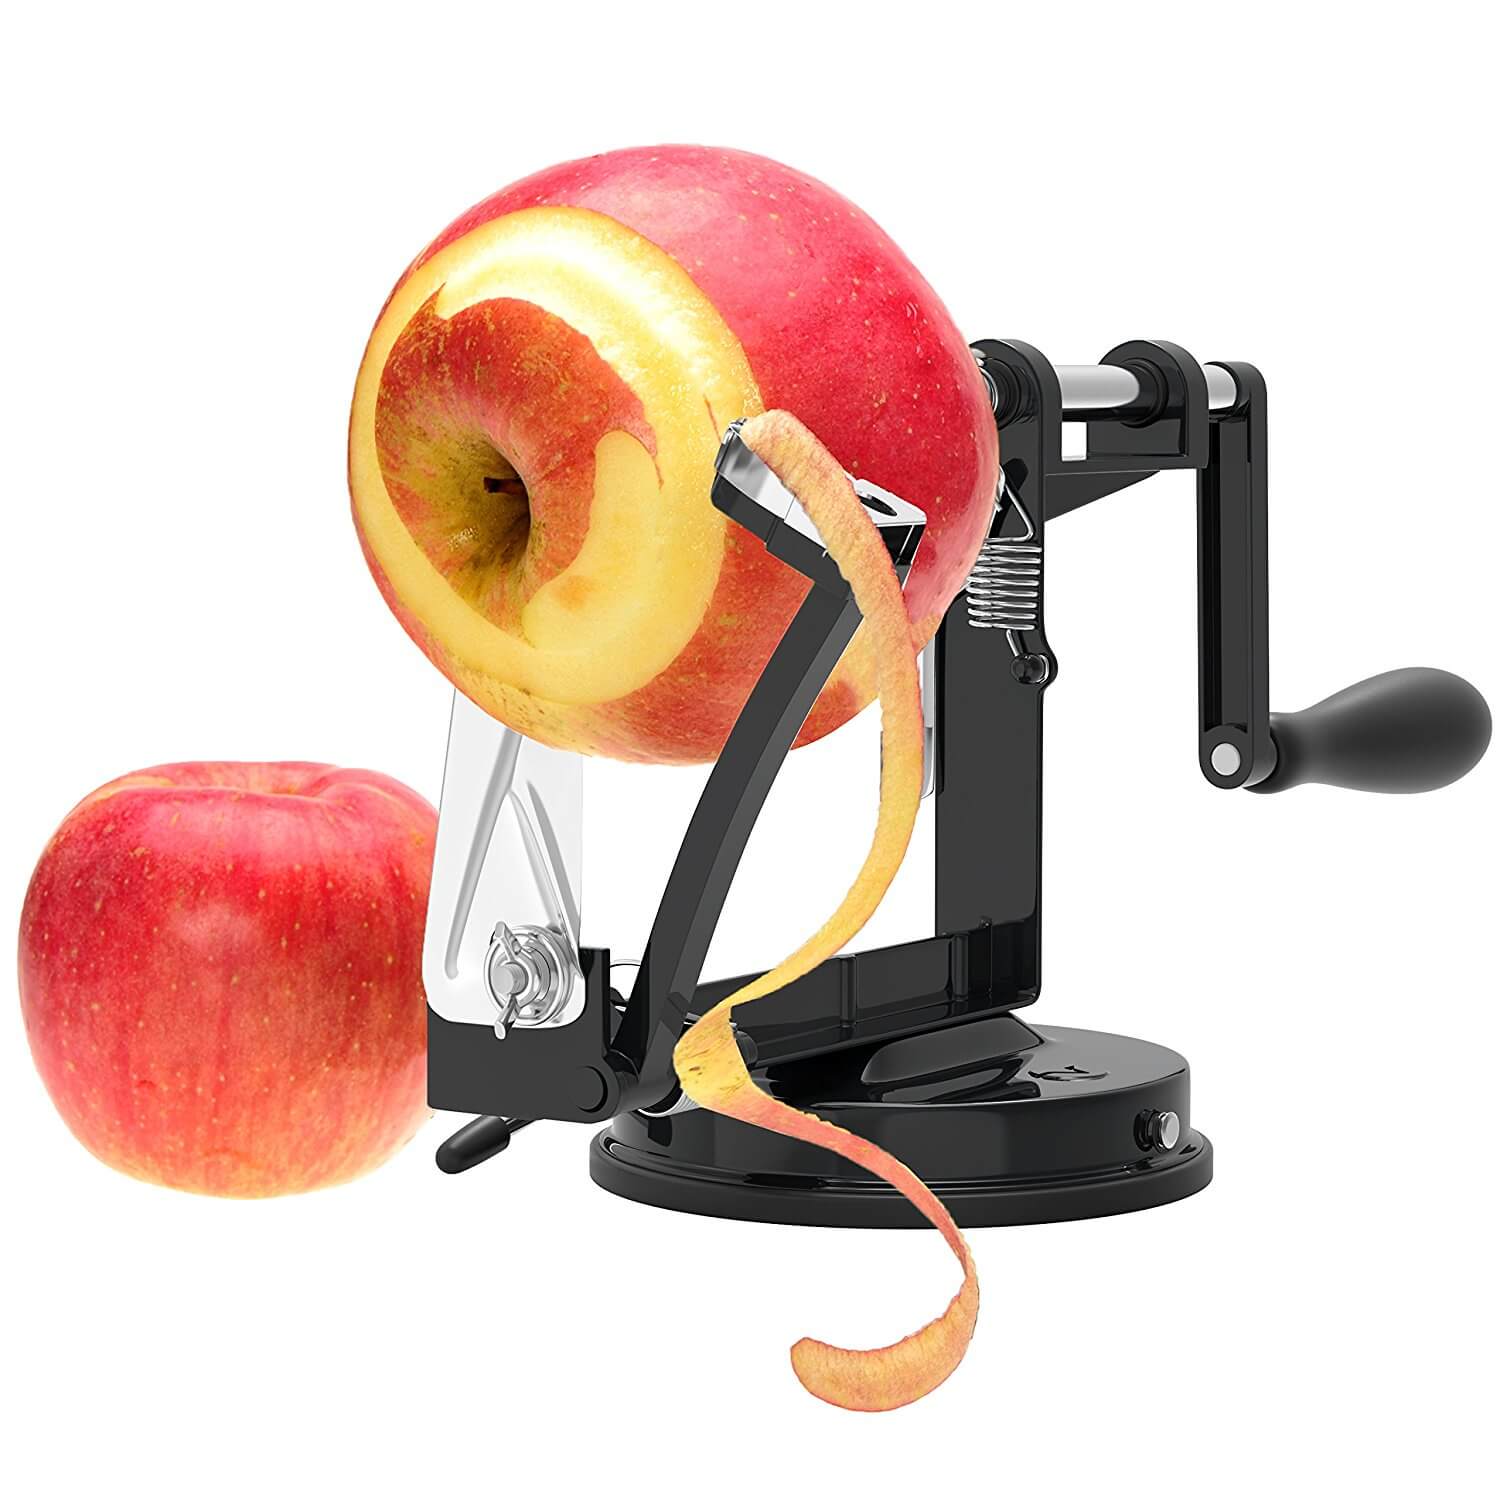 motorized apple peeler